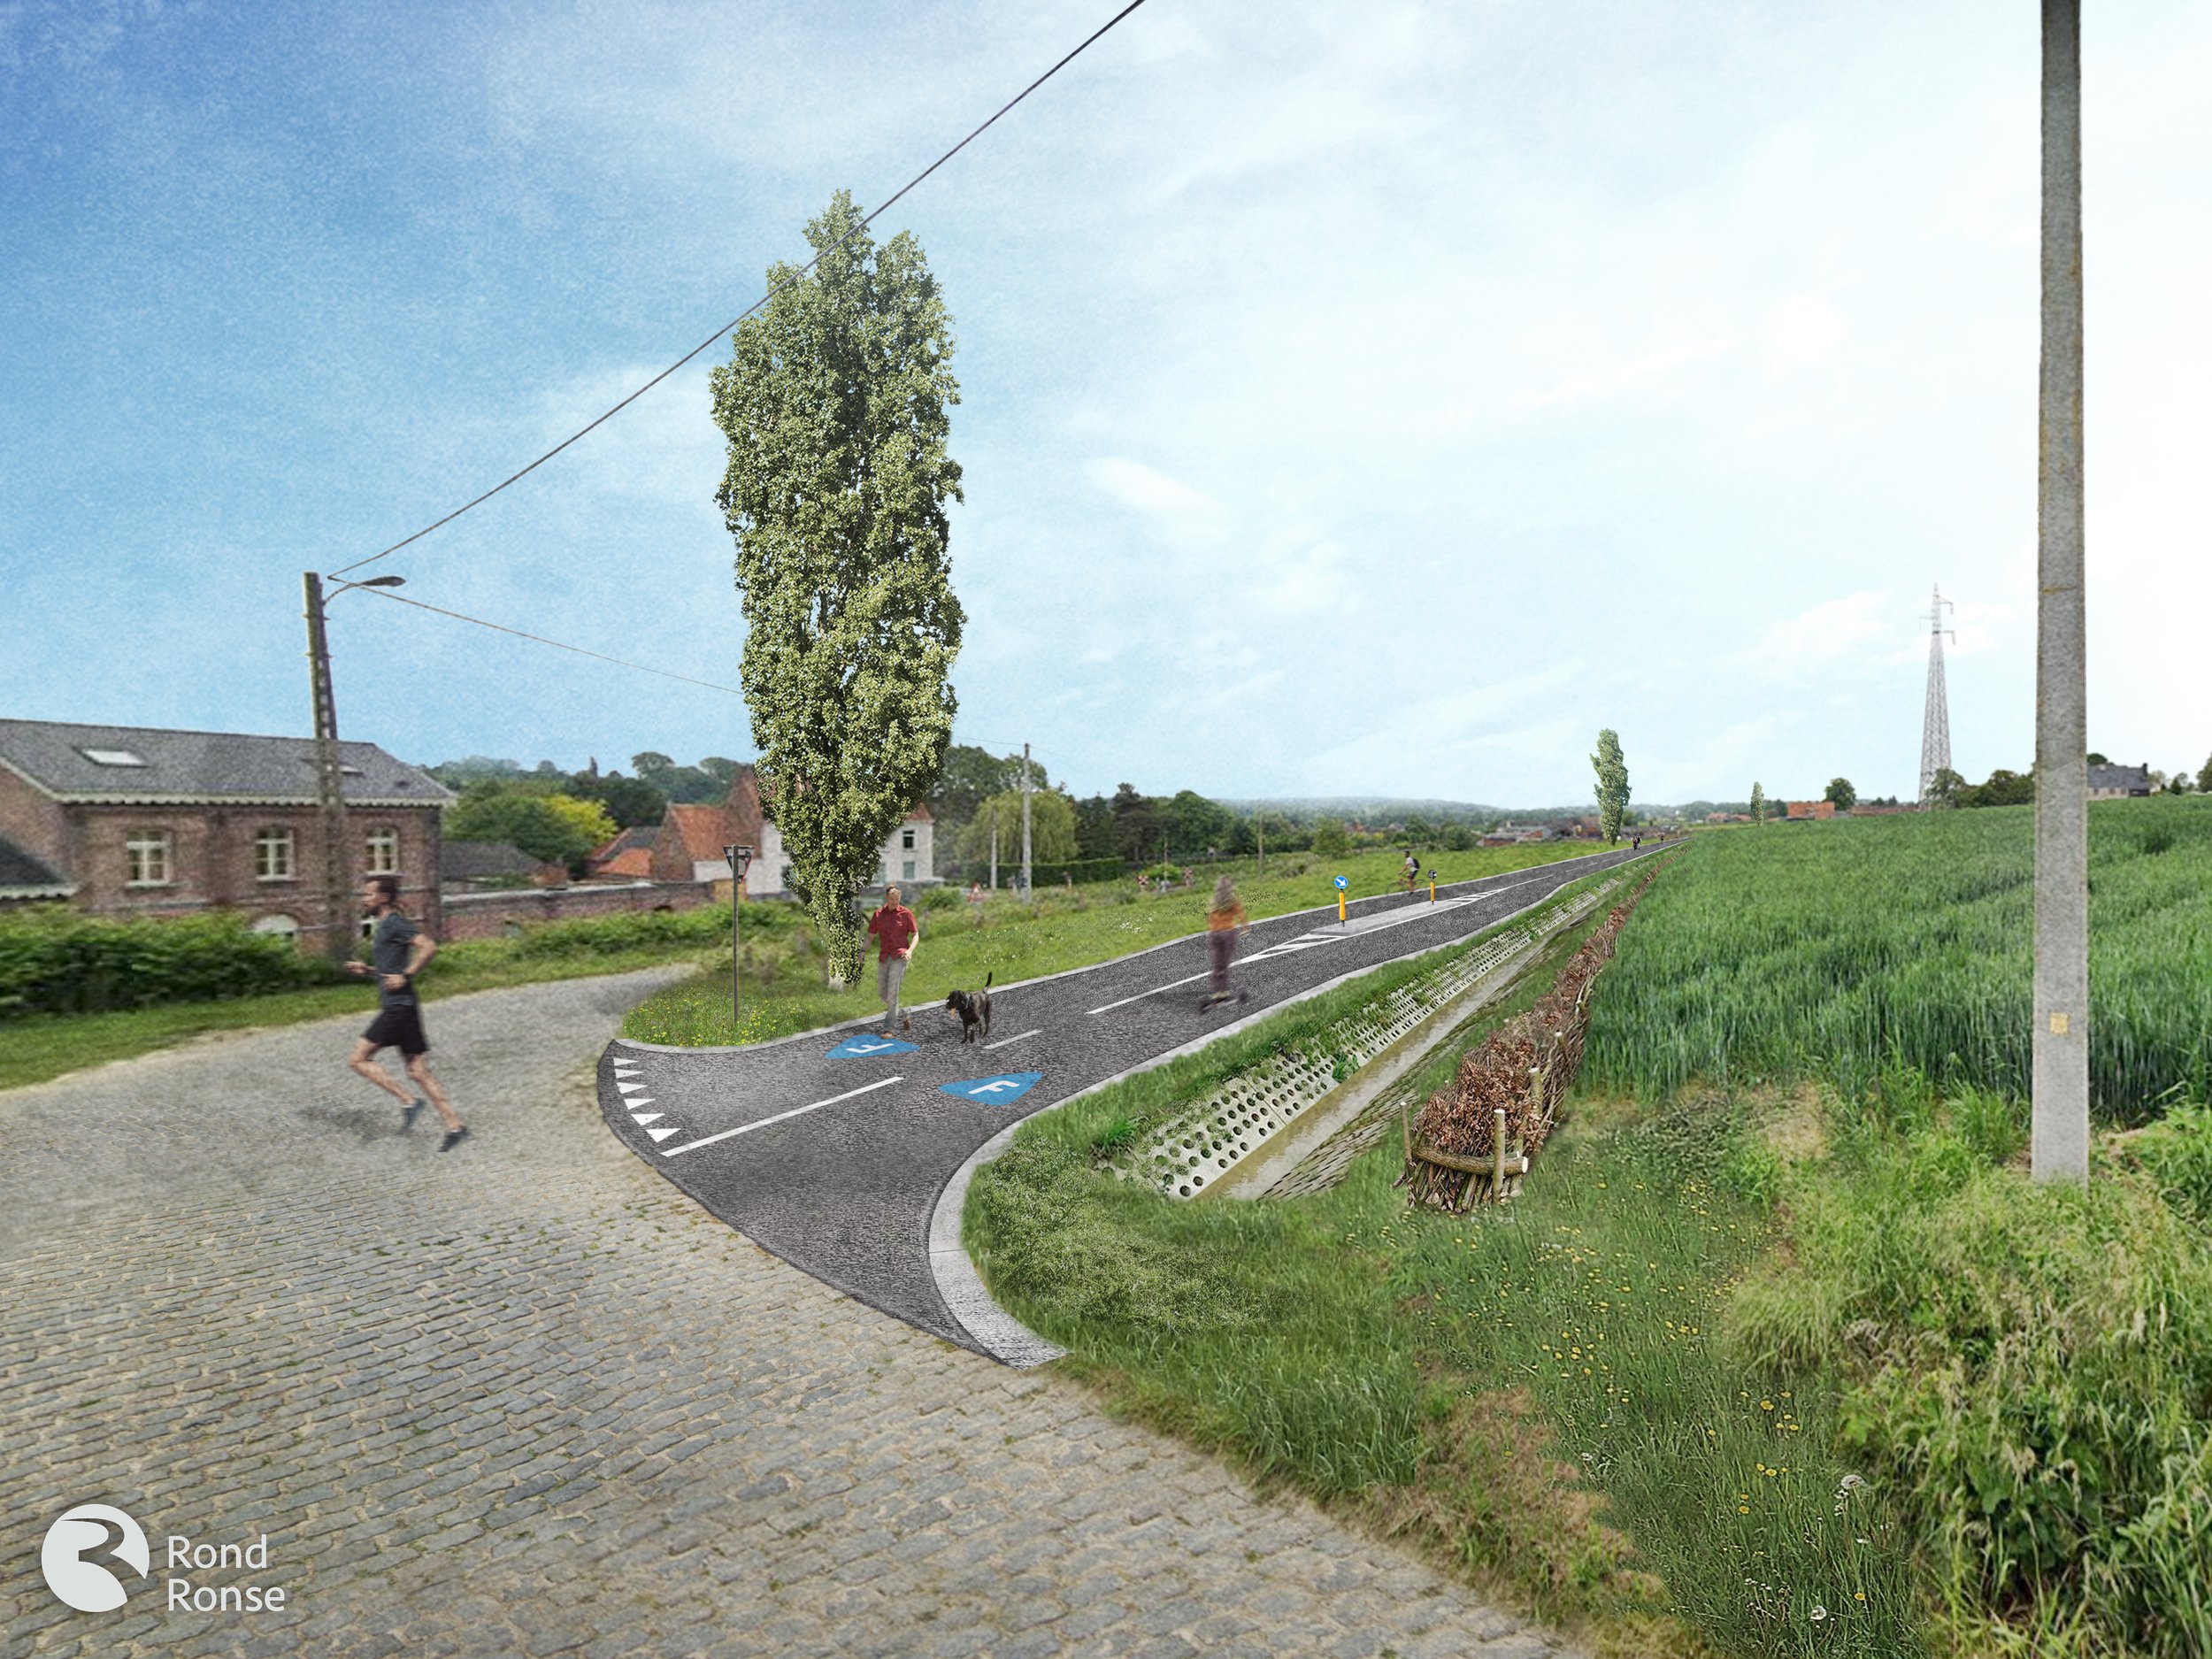   Impressie van verbinding ter hoogte van Stationsberg richting Mussestraat. Aanleg van erosiedam langs de fietssnelweg.  